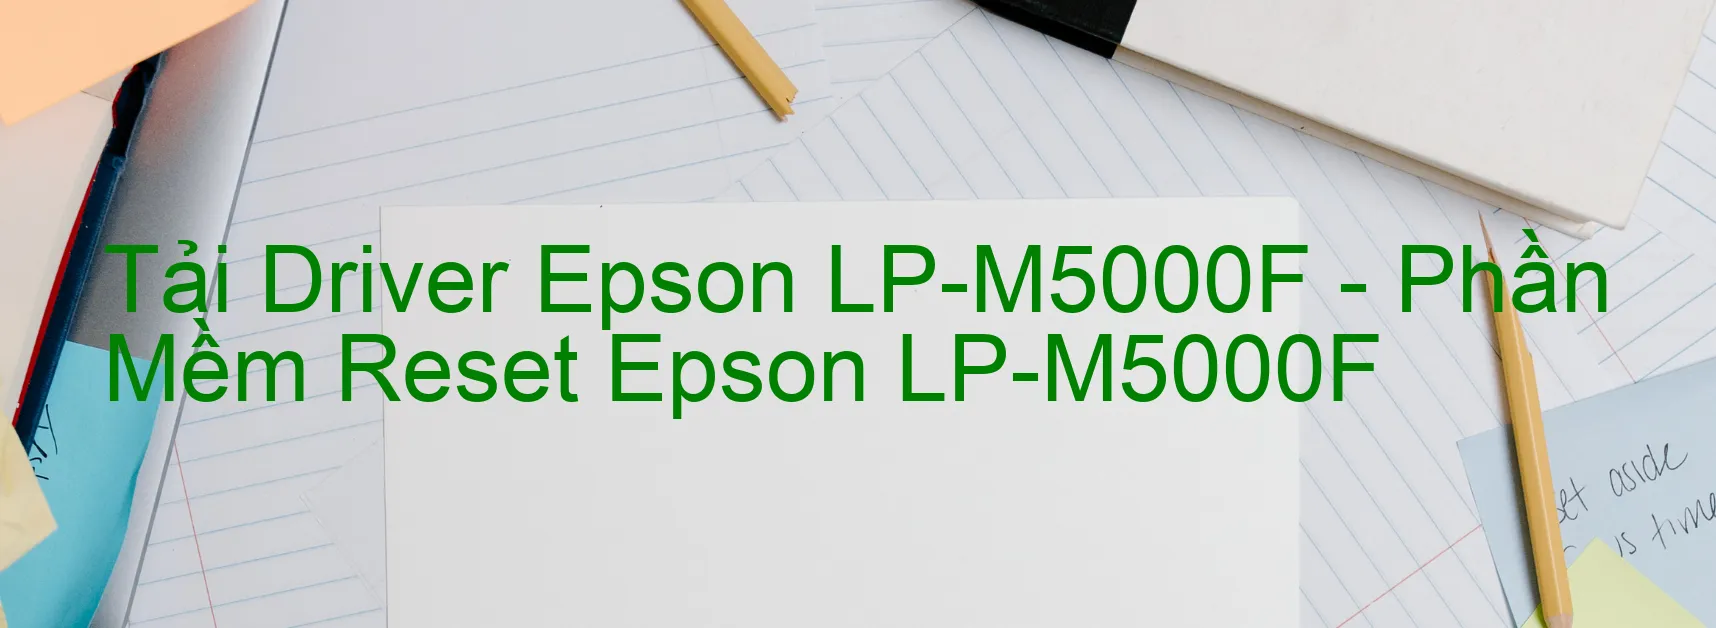 Driver Epson LP-M5000F, Phần Mềm Reset Epson LP-M5000F